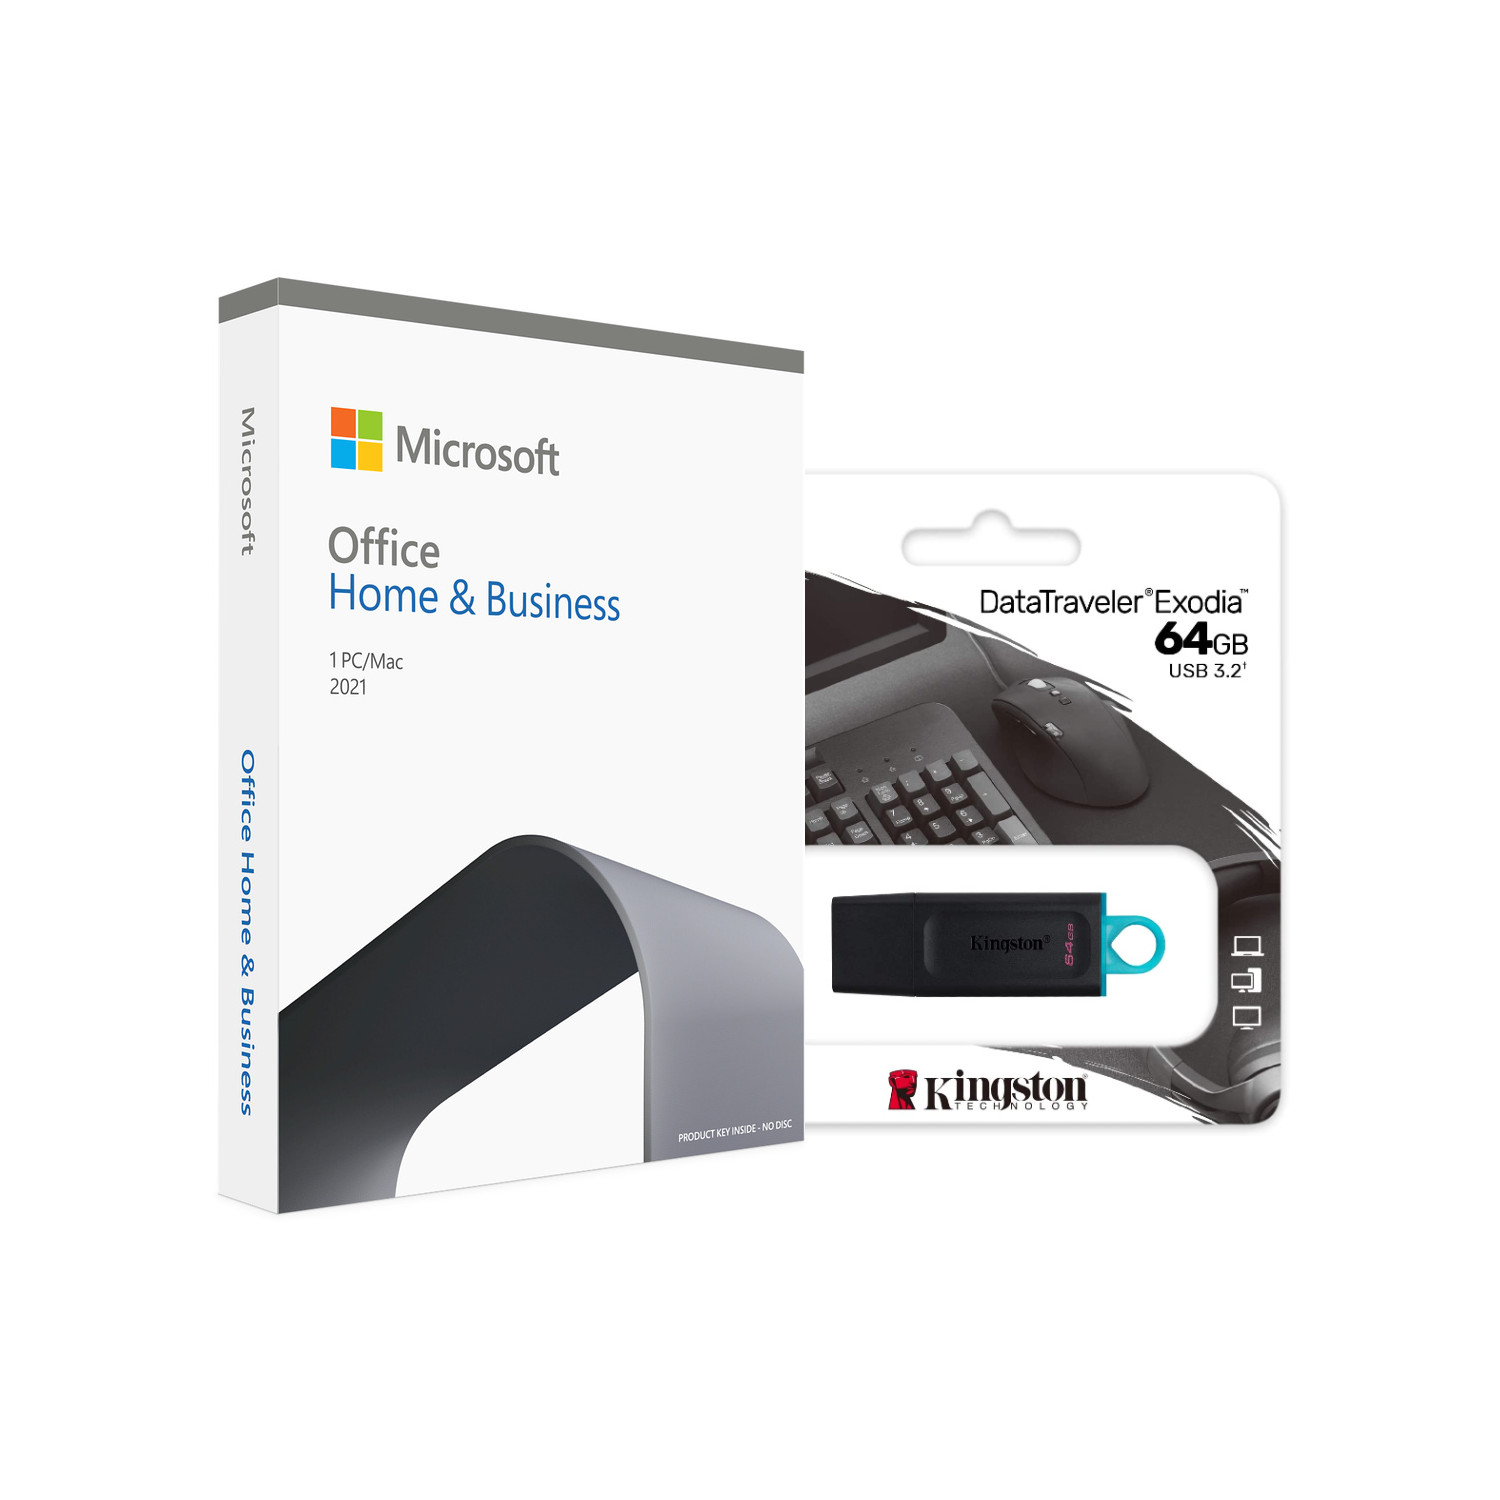 Microsoft Office Home & Business 2021 | 1 Person, One-Time Purchase, Retail Box (w/ Key Card inside), English (PC/Mac) w/ Kingston 64GB USB 3.2 Drive